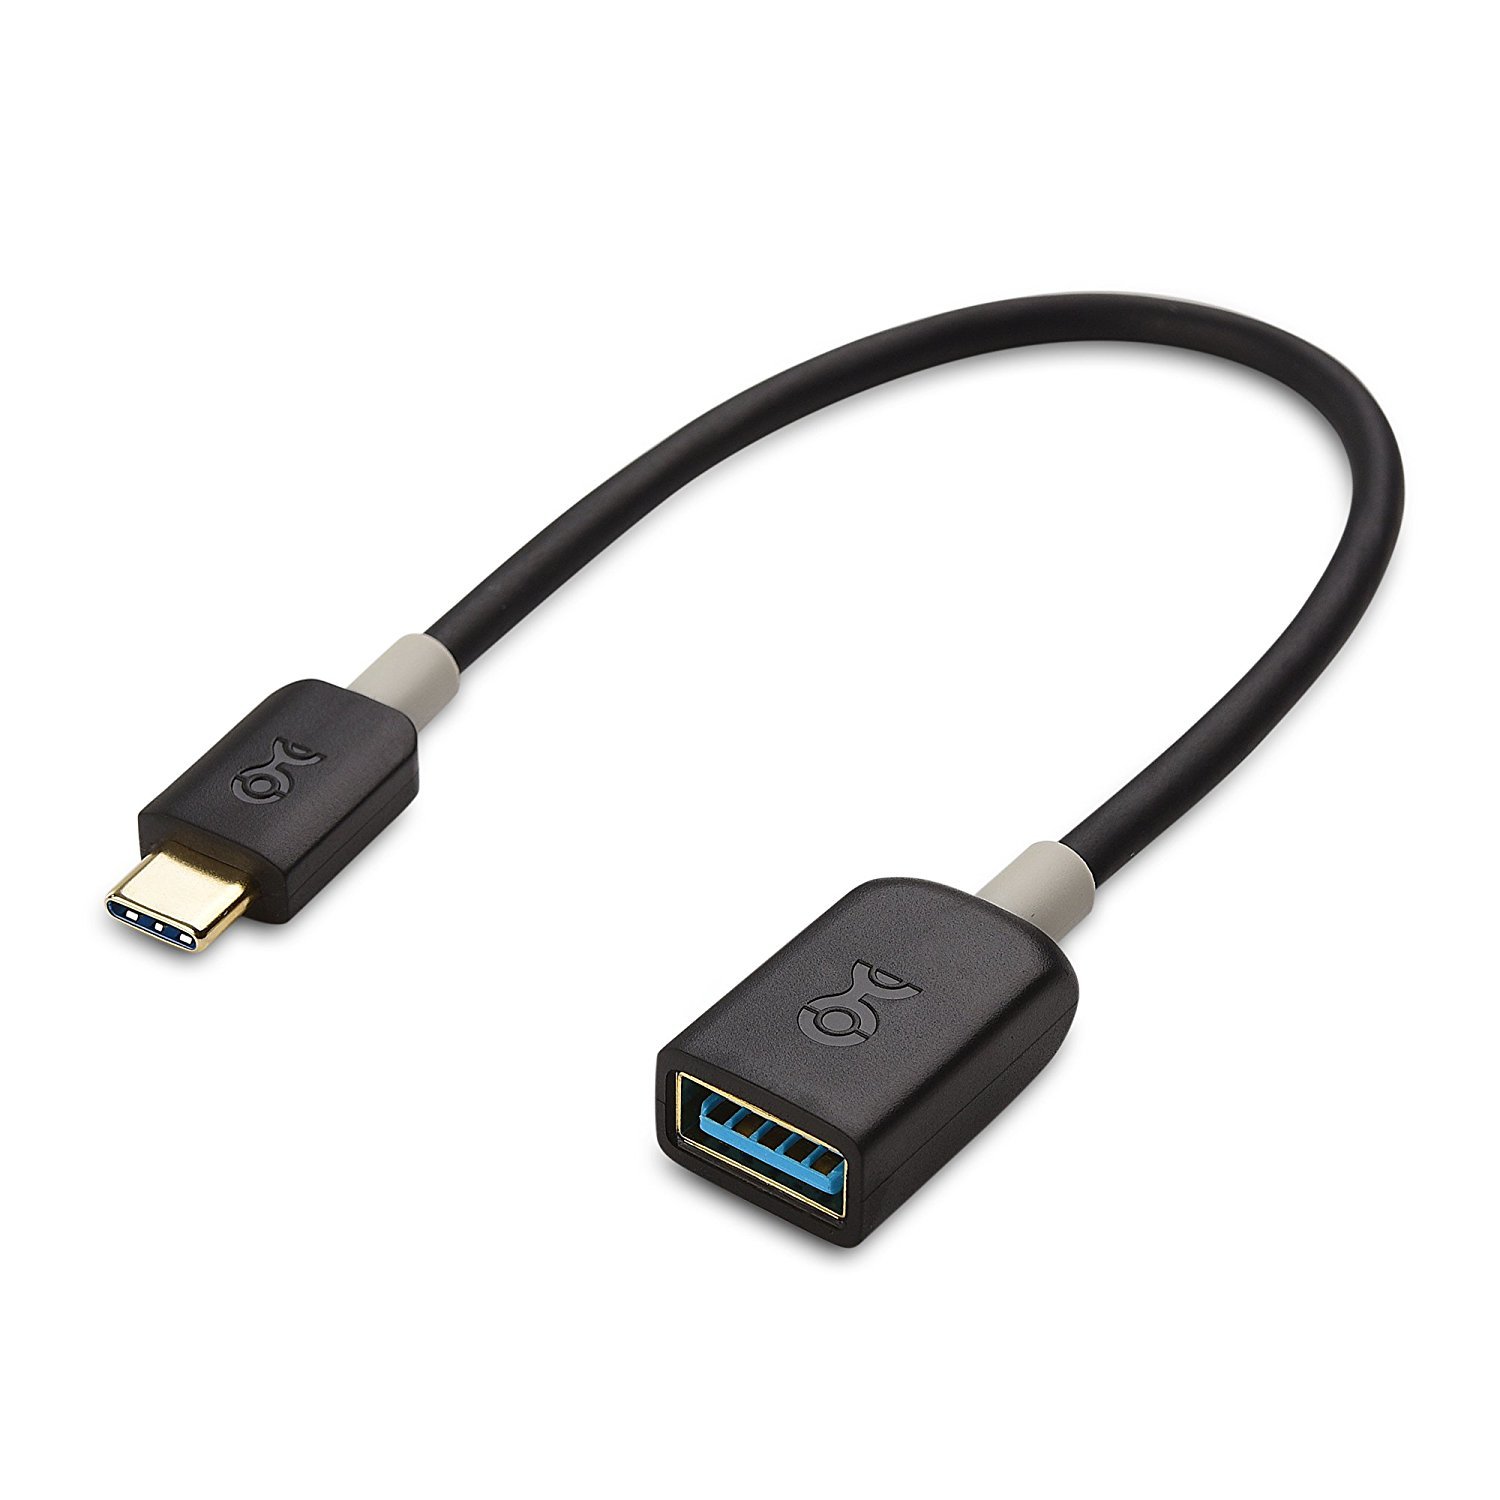 Usb vid 2c4e. OTG кабель USB Type c Samsung. Jabra PANACAST 50 USB-C to USB-A Cable провод. Переходник USB 3.0 на USB Type-c внутренний. Адаптер USB-C - USB-A 3.0.